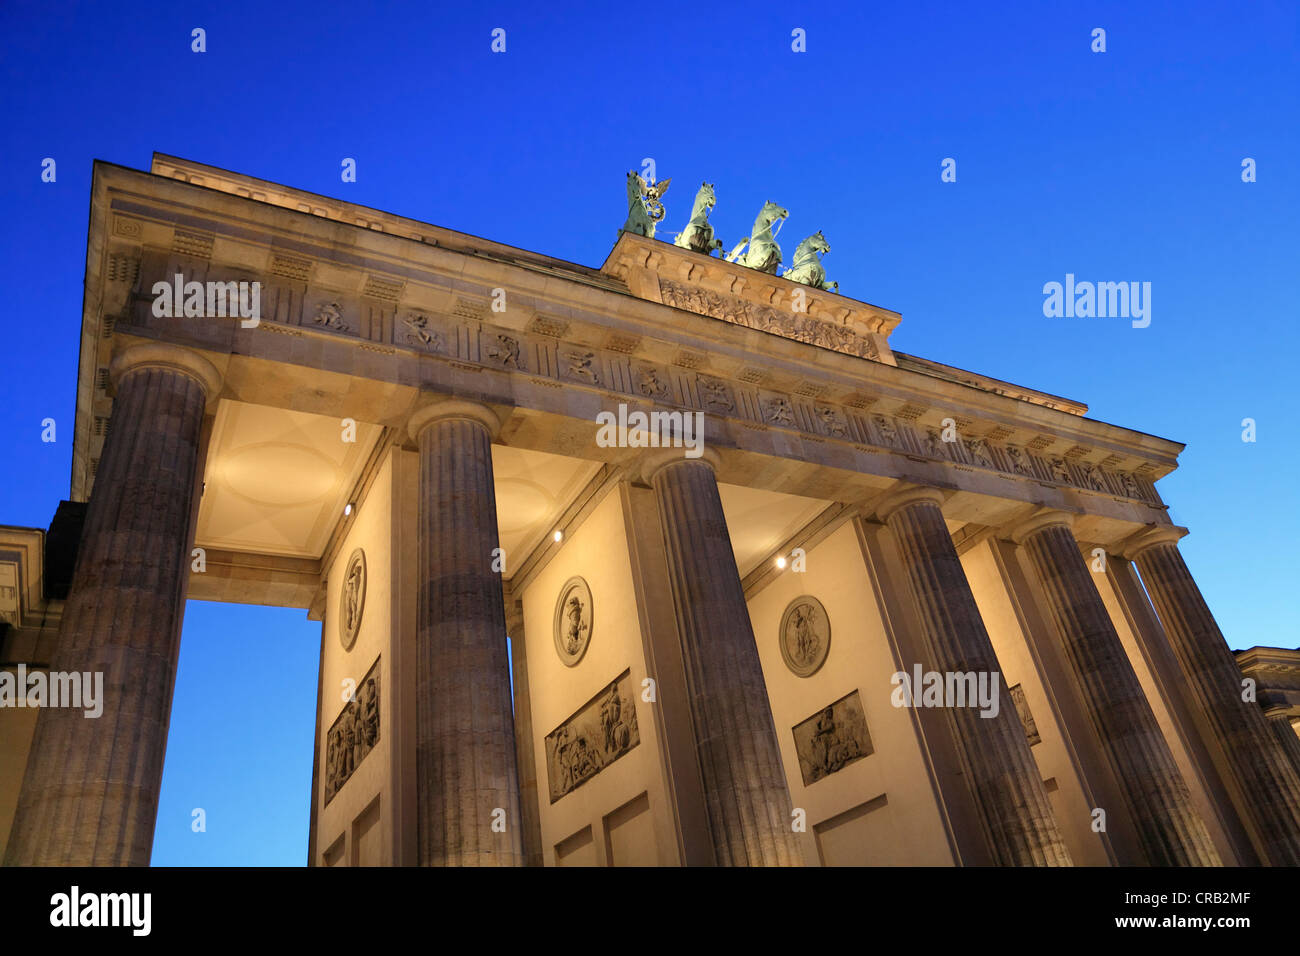 La porte de Brandebourg à l'heure bleue, Berlin-Mitte, Berlin, Germany, Europe Banque D'Images